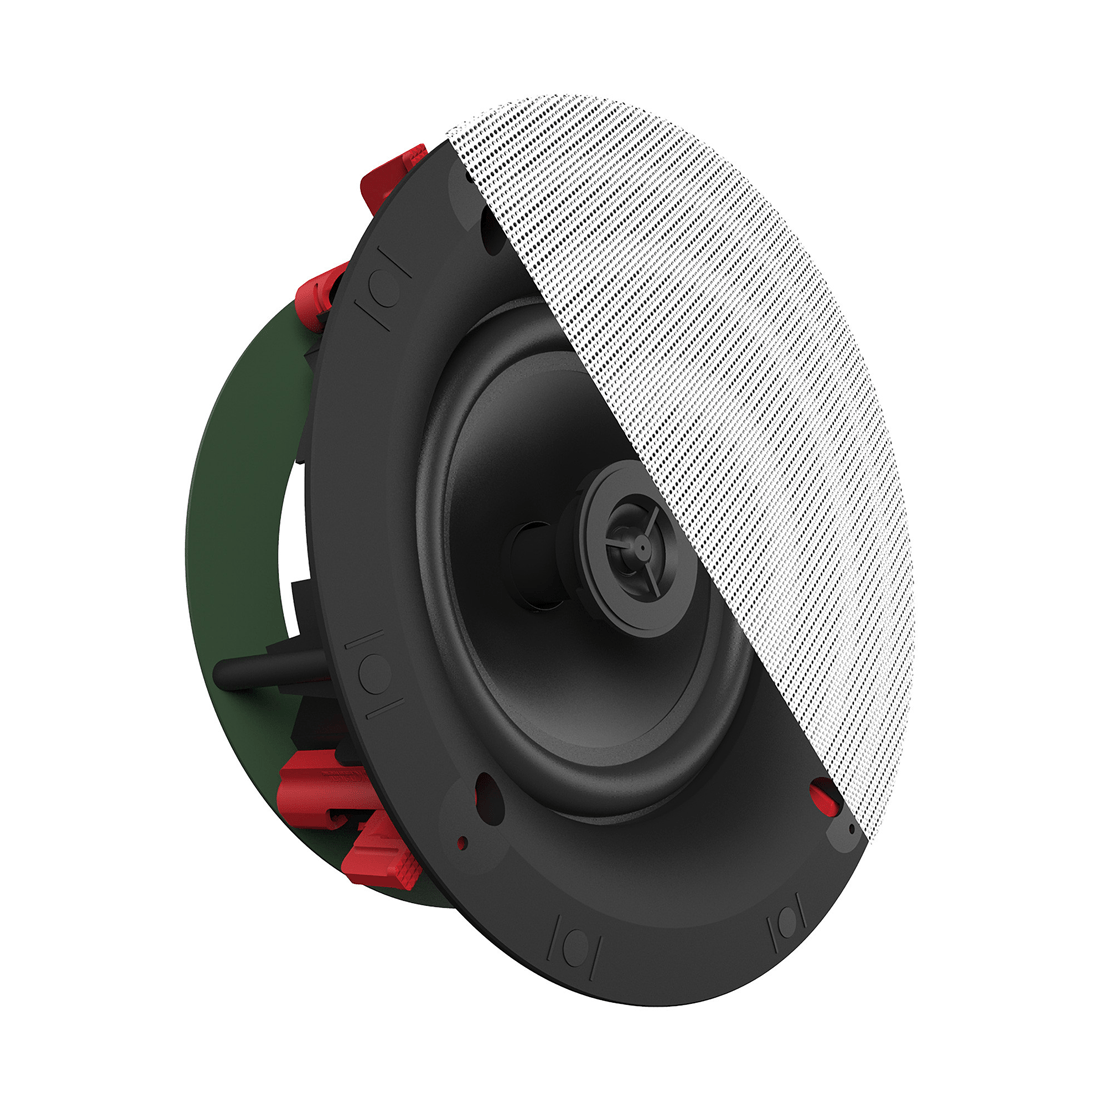 Klipsch CS-16C II 6.5 " In-Ceiling Speaker - Each